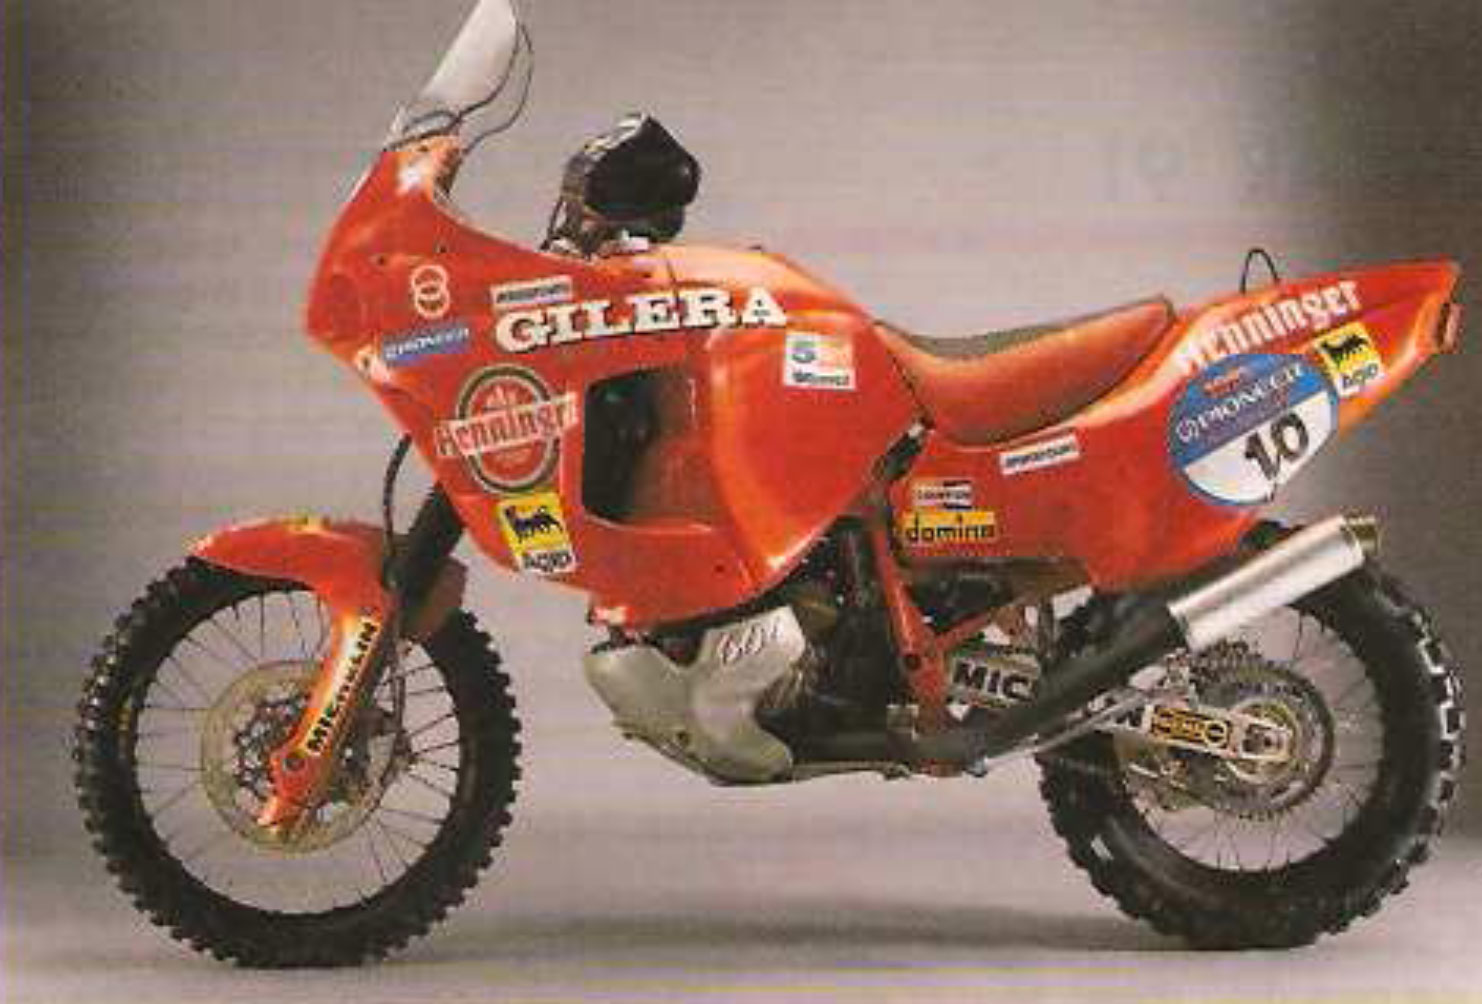 GILERA 600